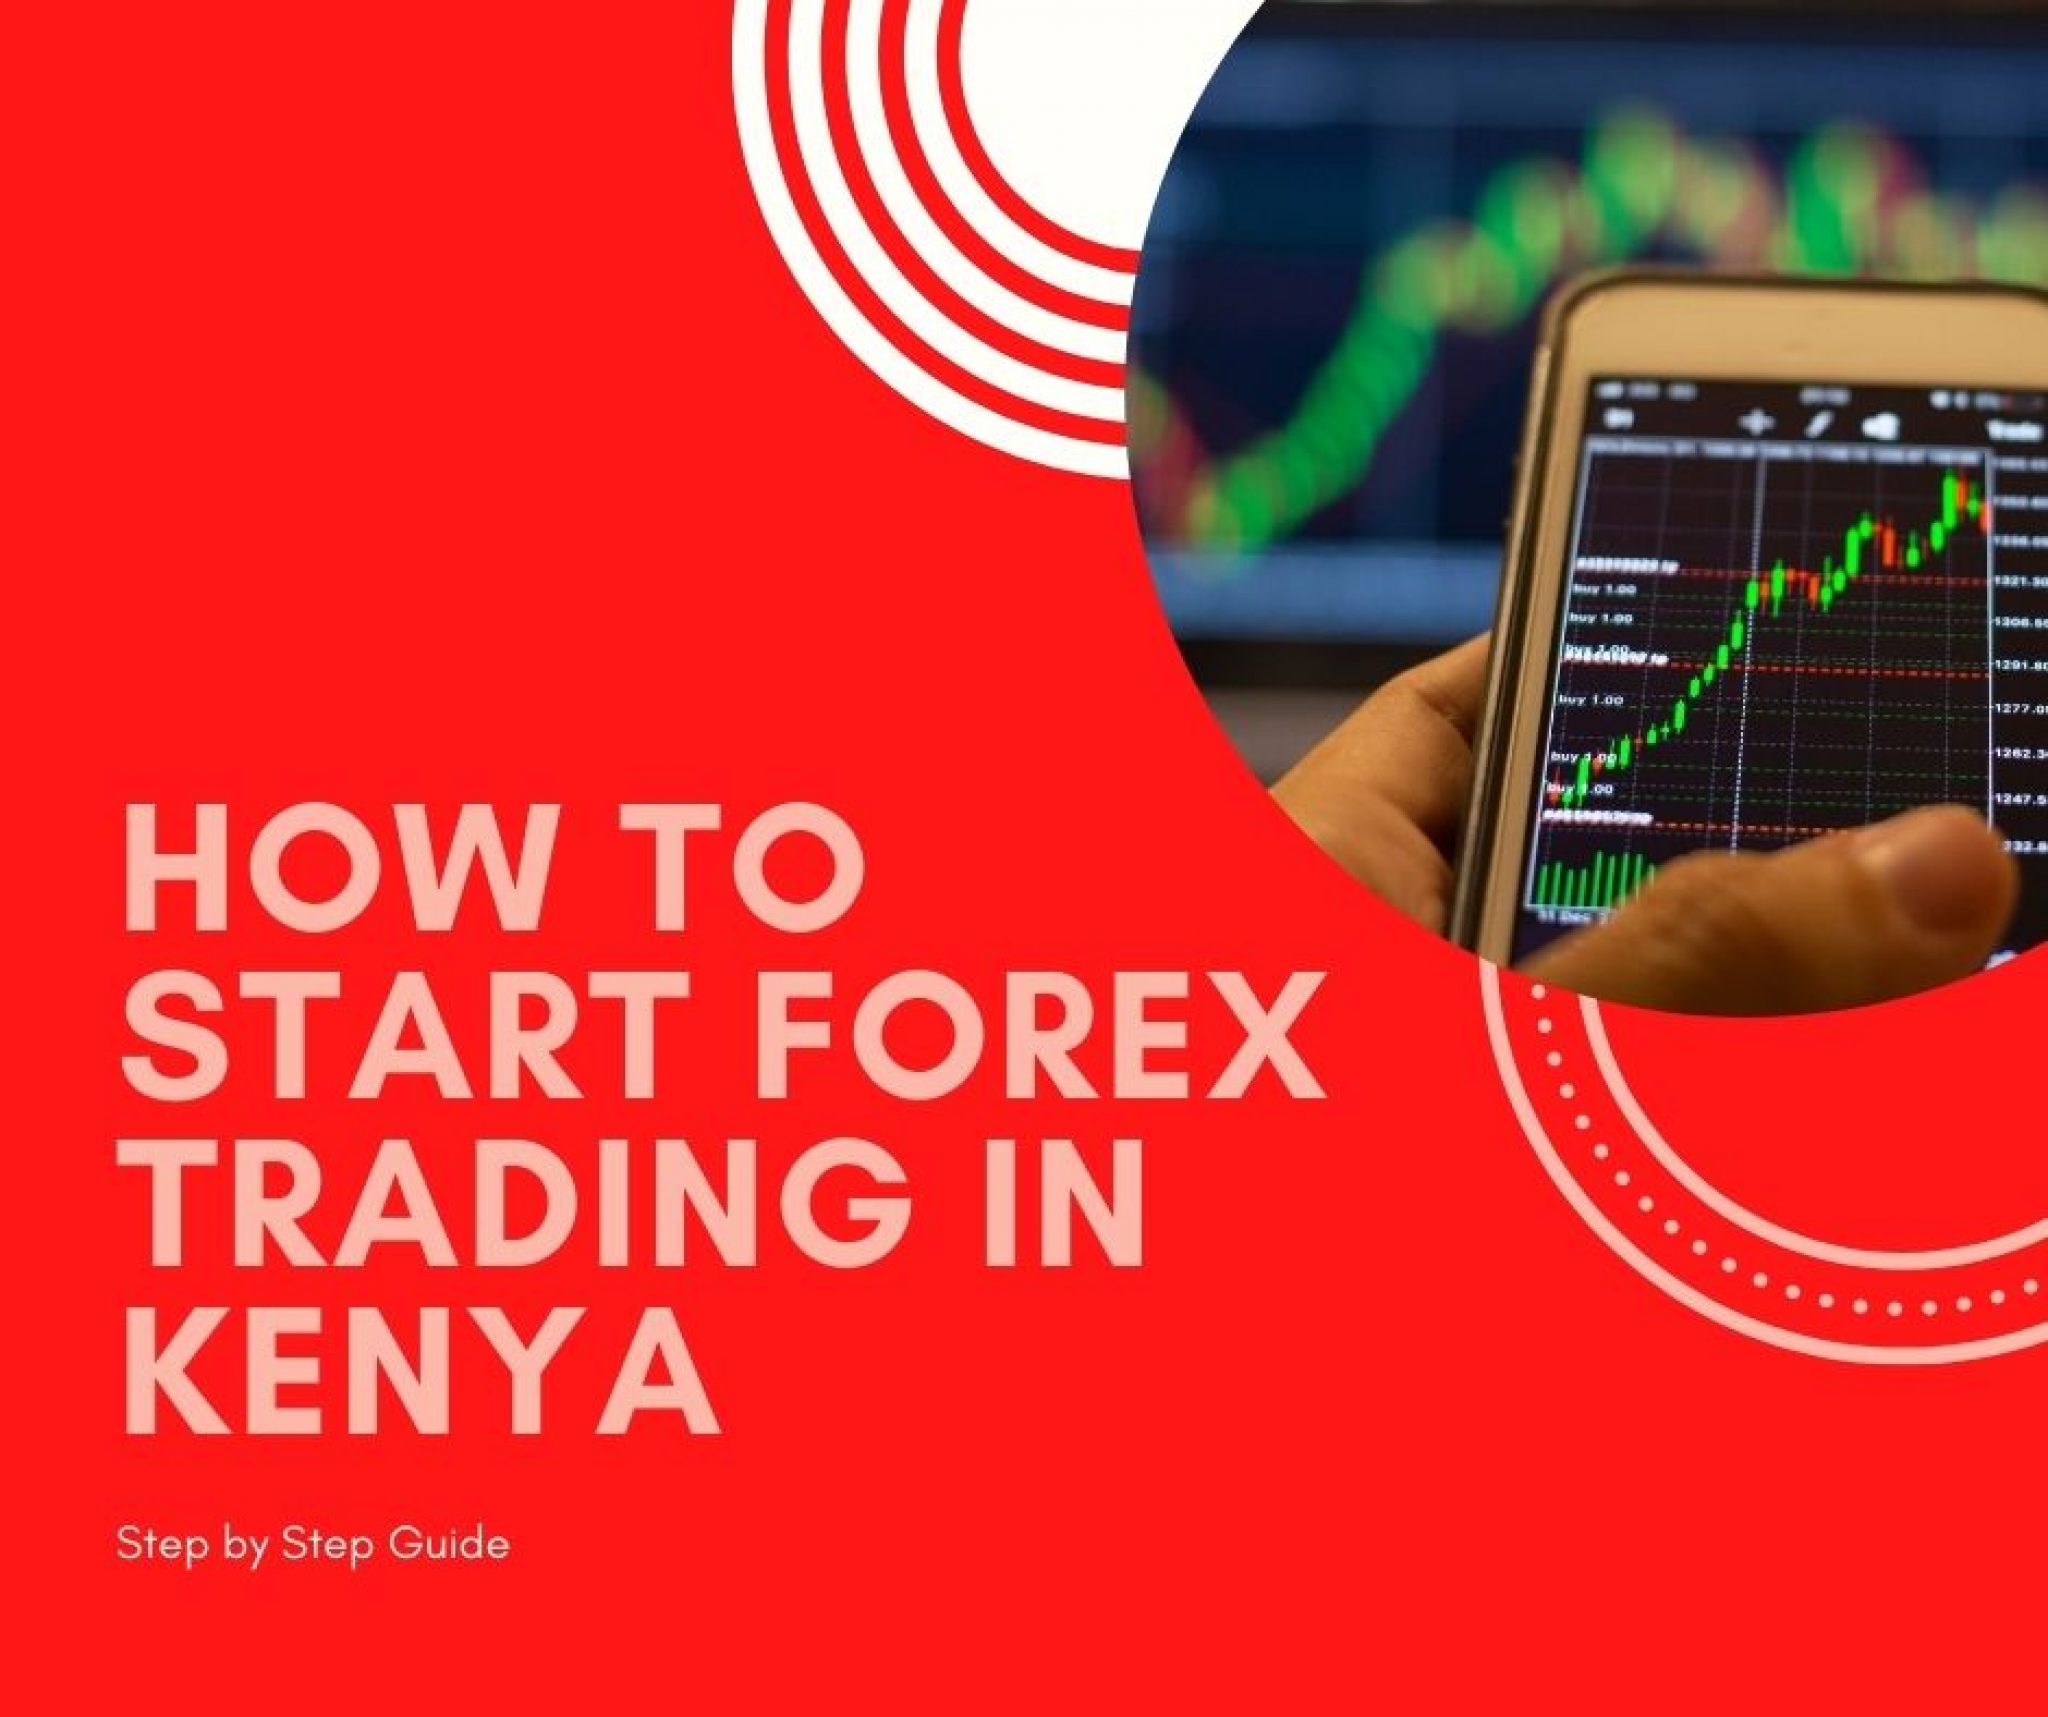 Forex trading apps in kenya